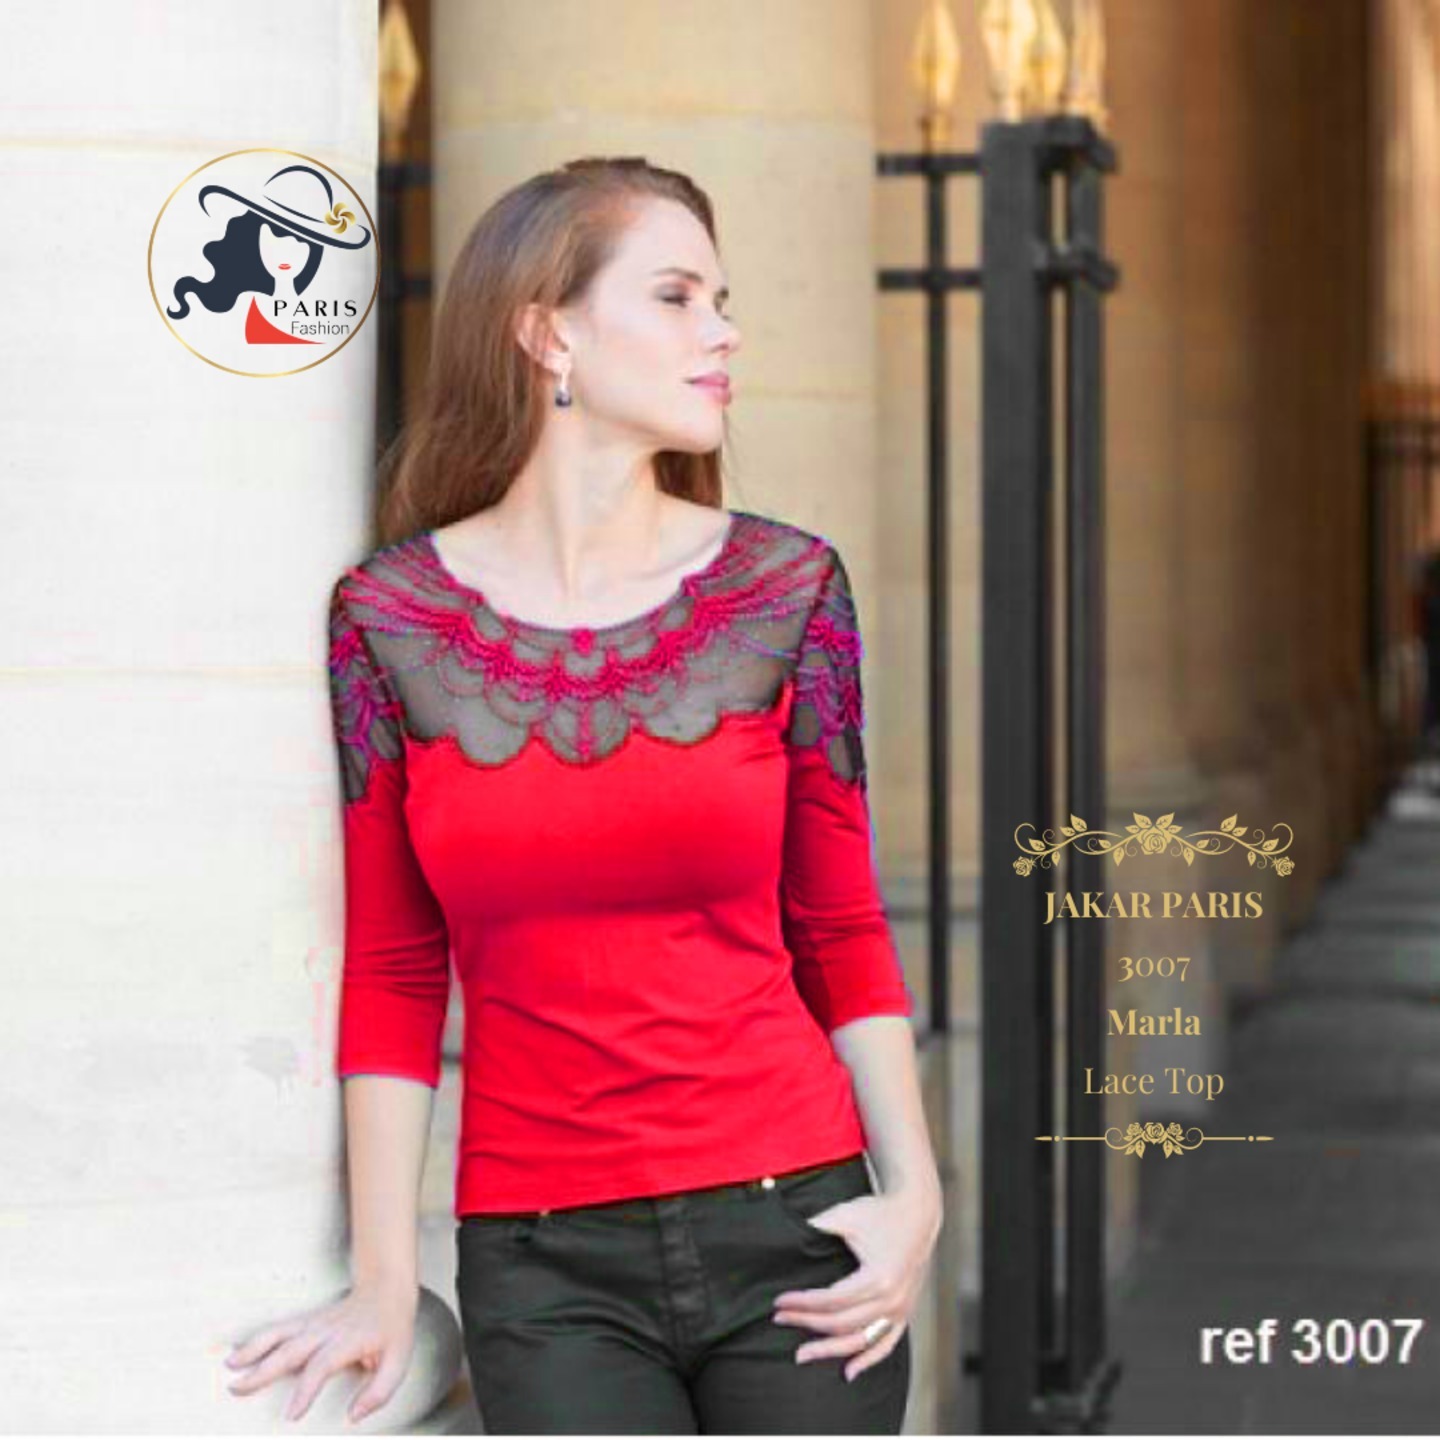 JAKAR PARIS  3007  Marla  Ruby Red Lace Top